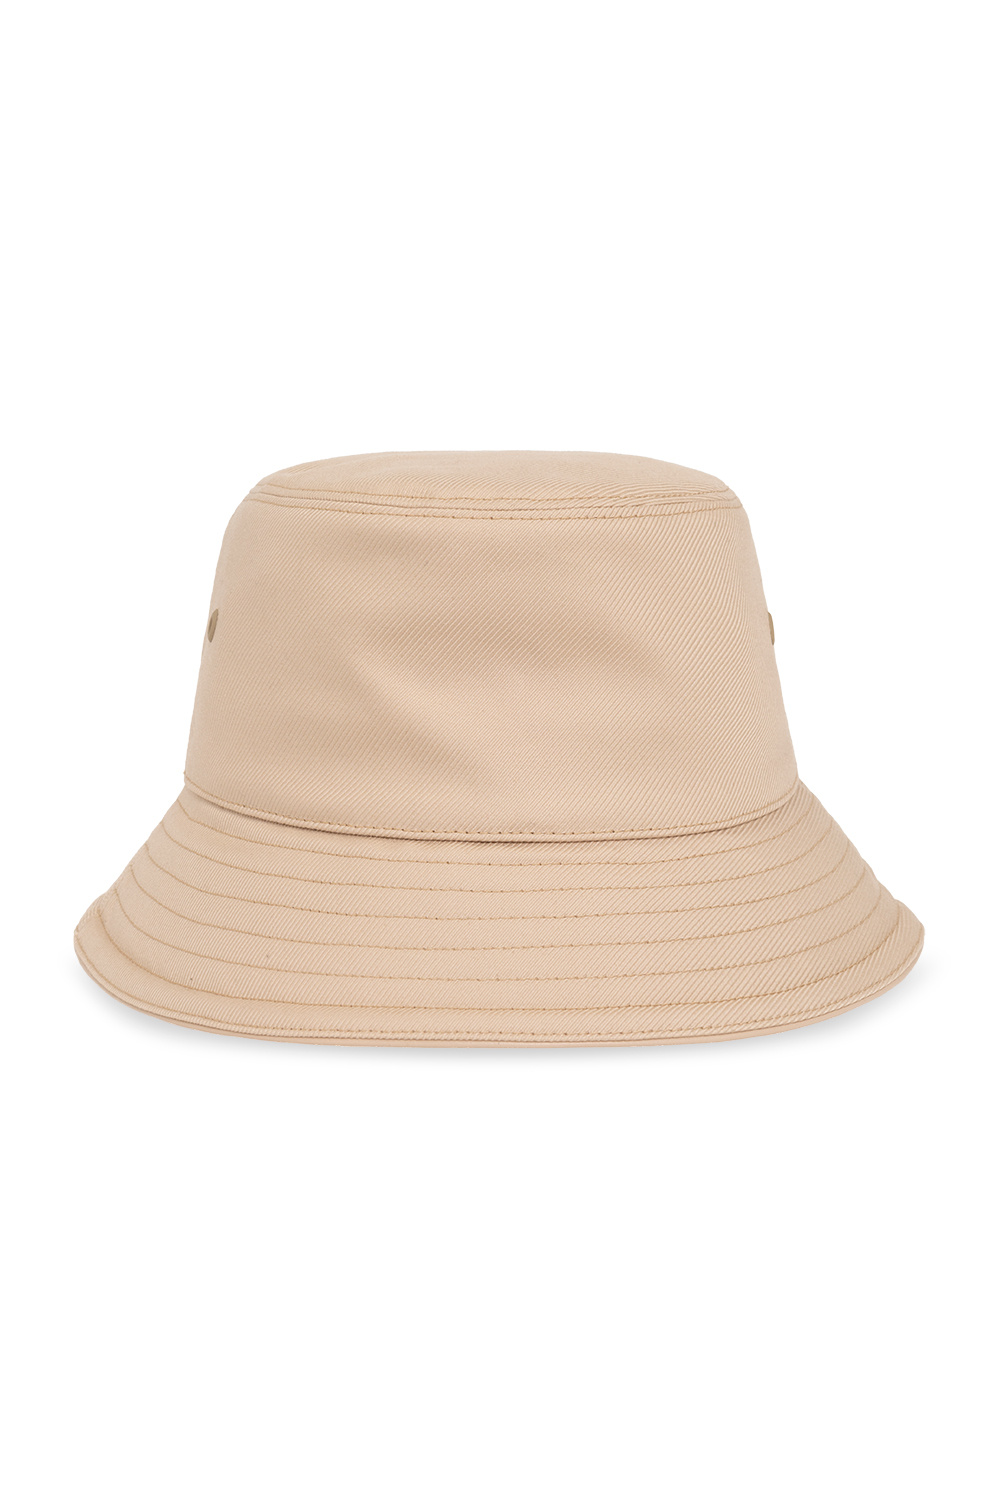 Burberry Maison Michel Beige Straw Charles Panama Hat